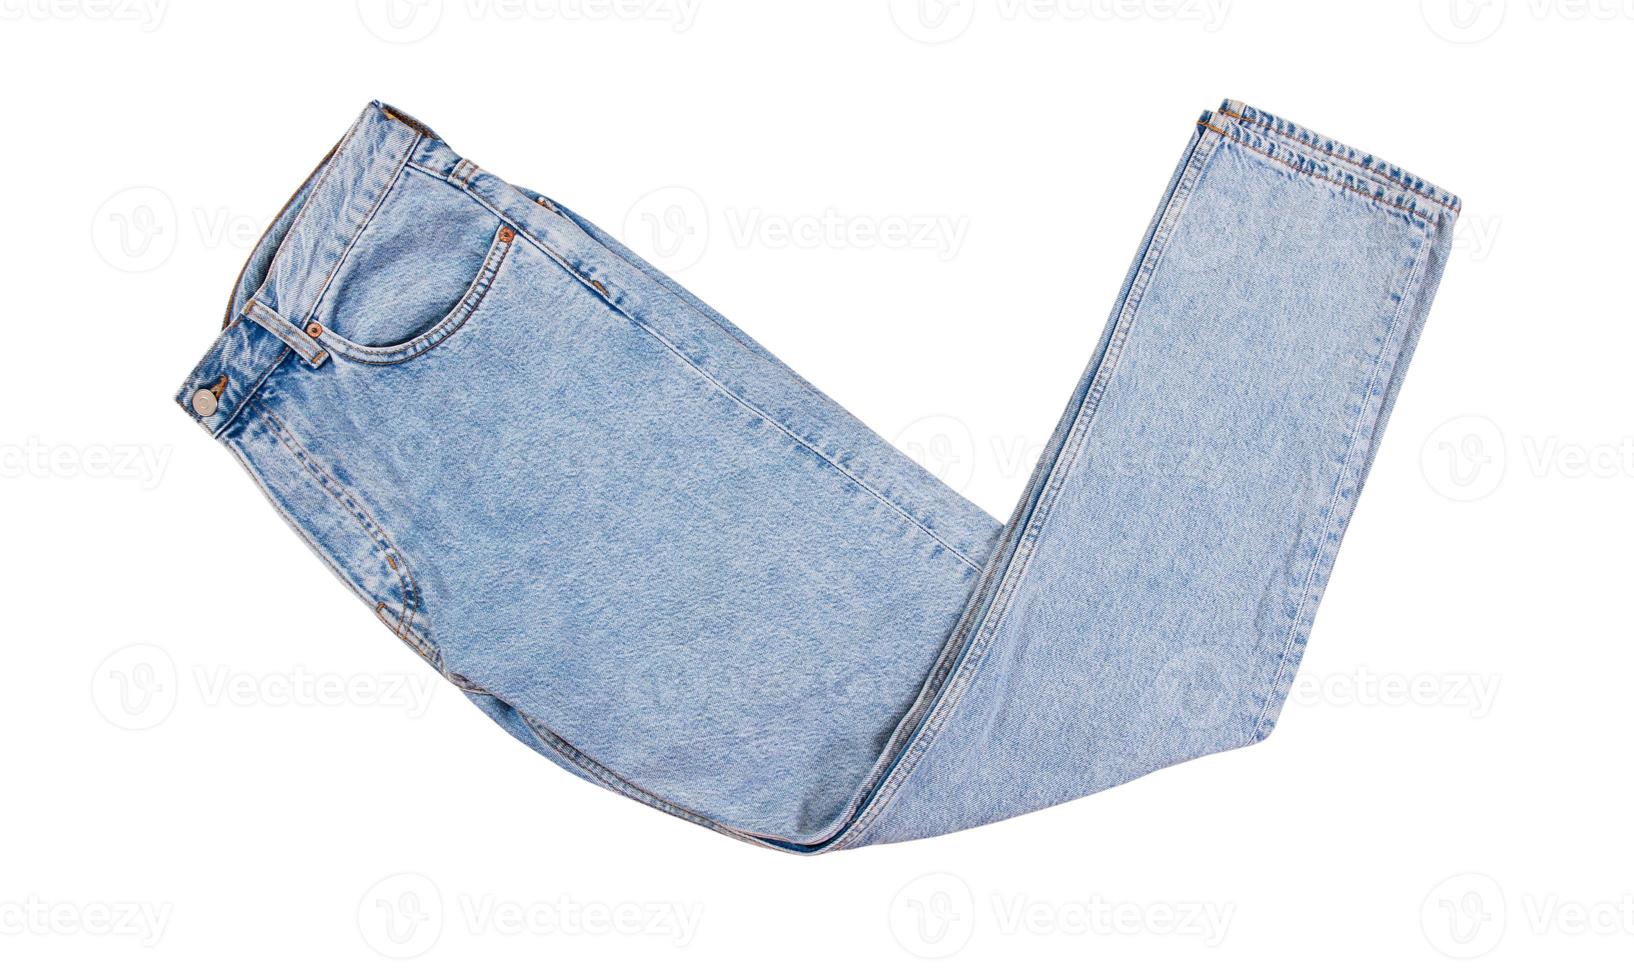 Pantalones de mezclilla aislados, jeans doblados azul aislado sobre fondo blanco de cerca foto